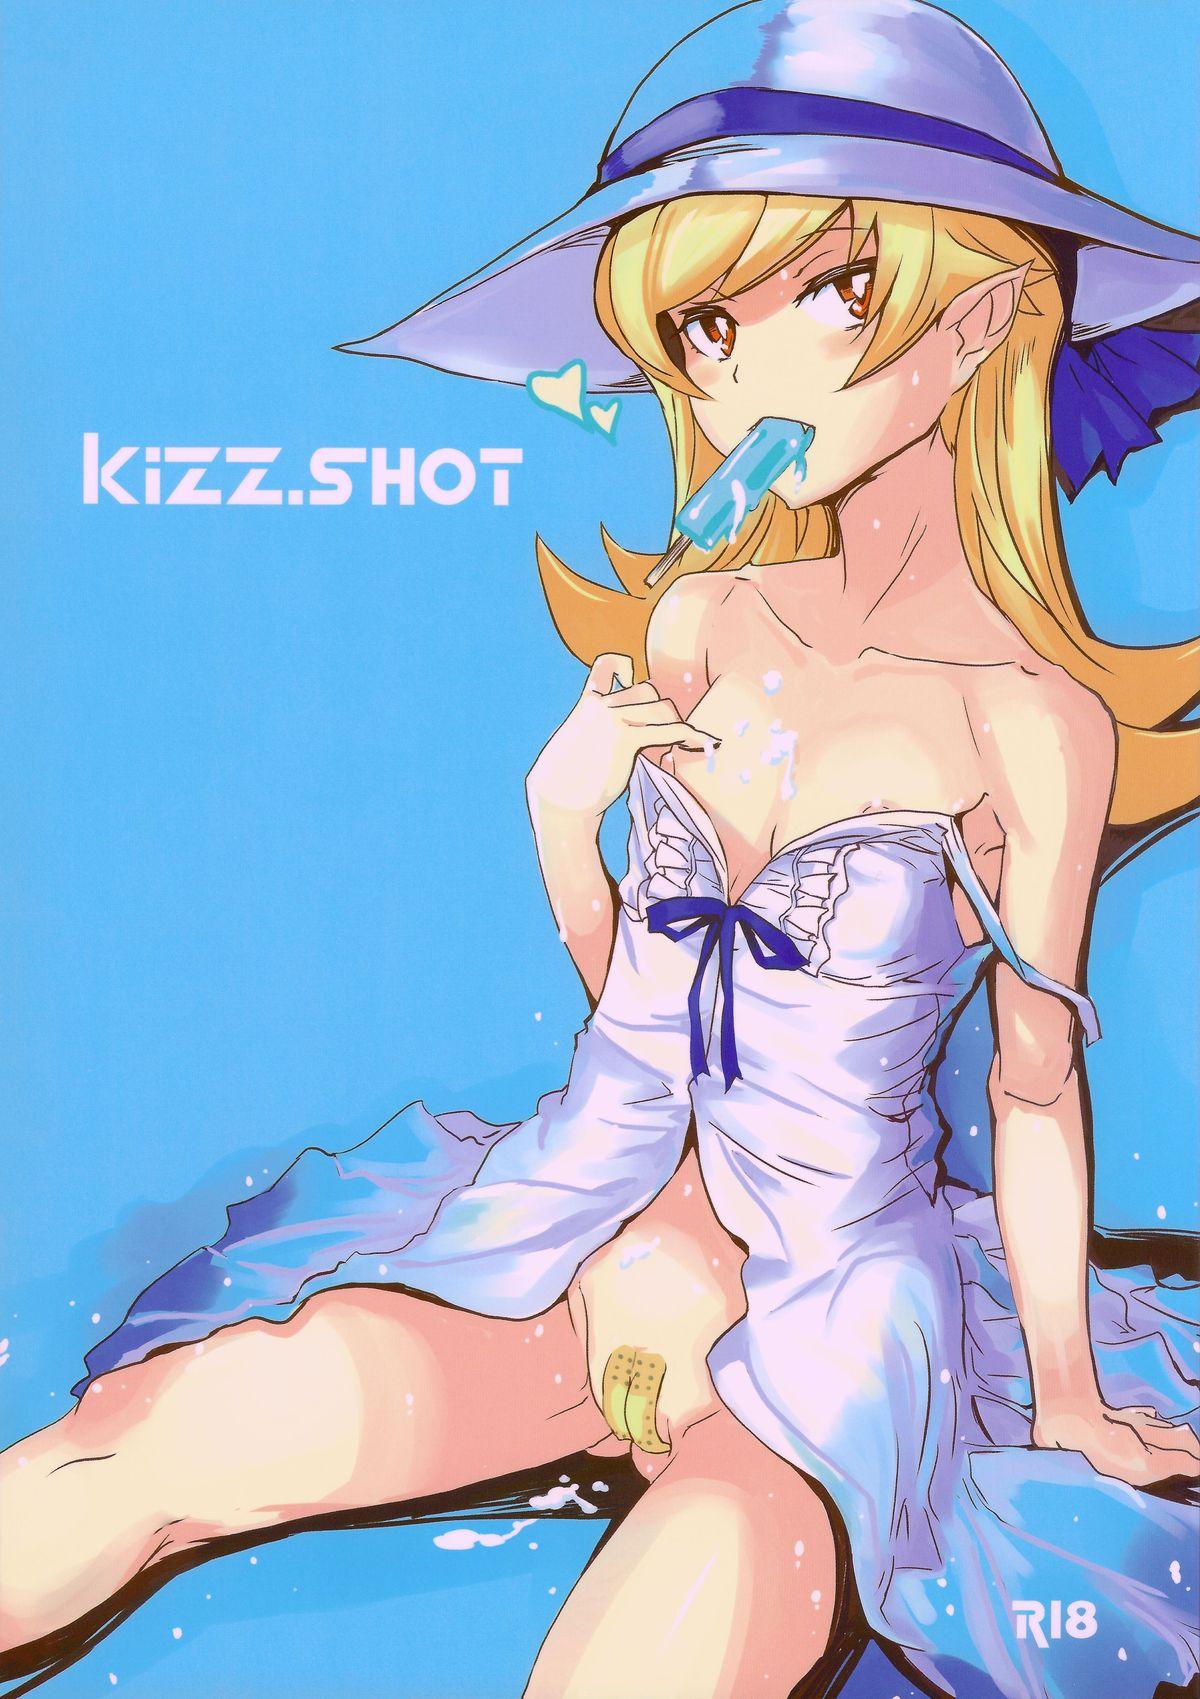 Orgia kizz.SHOT - Bakemonogatari Baile - Page 1